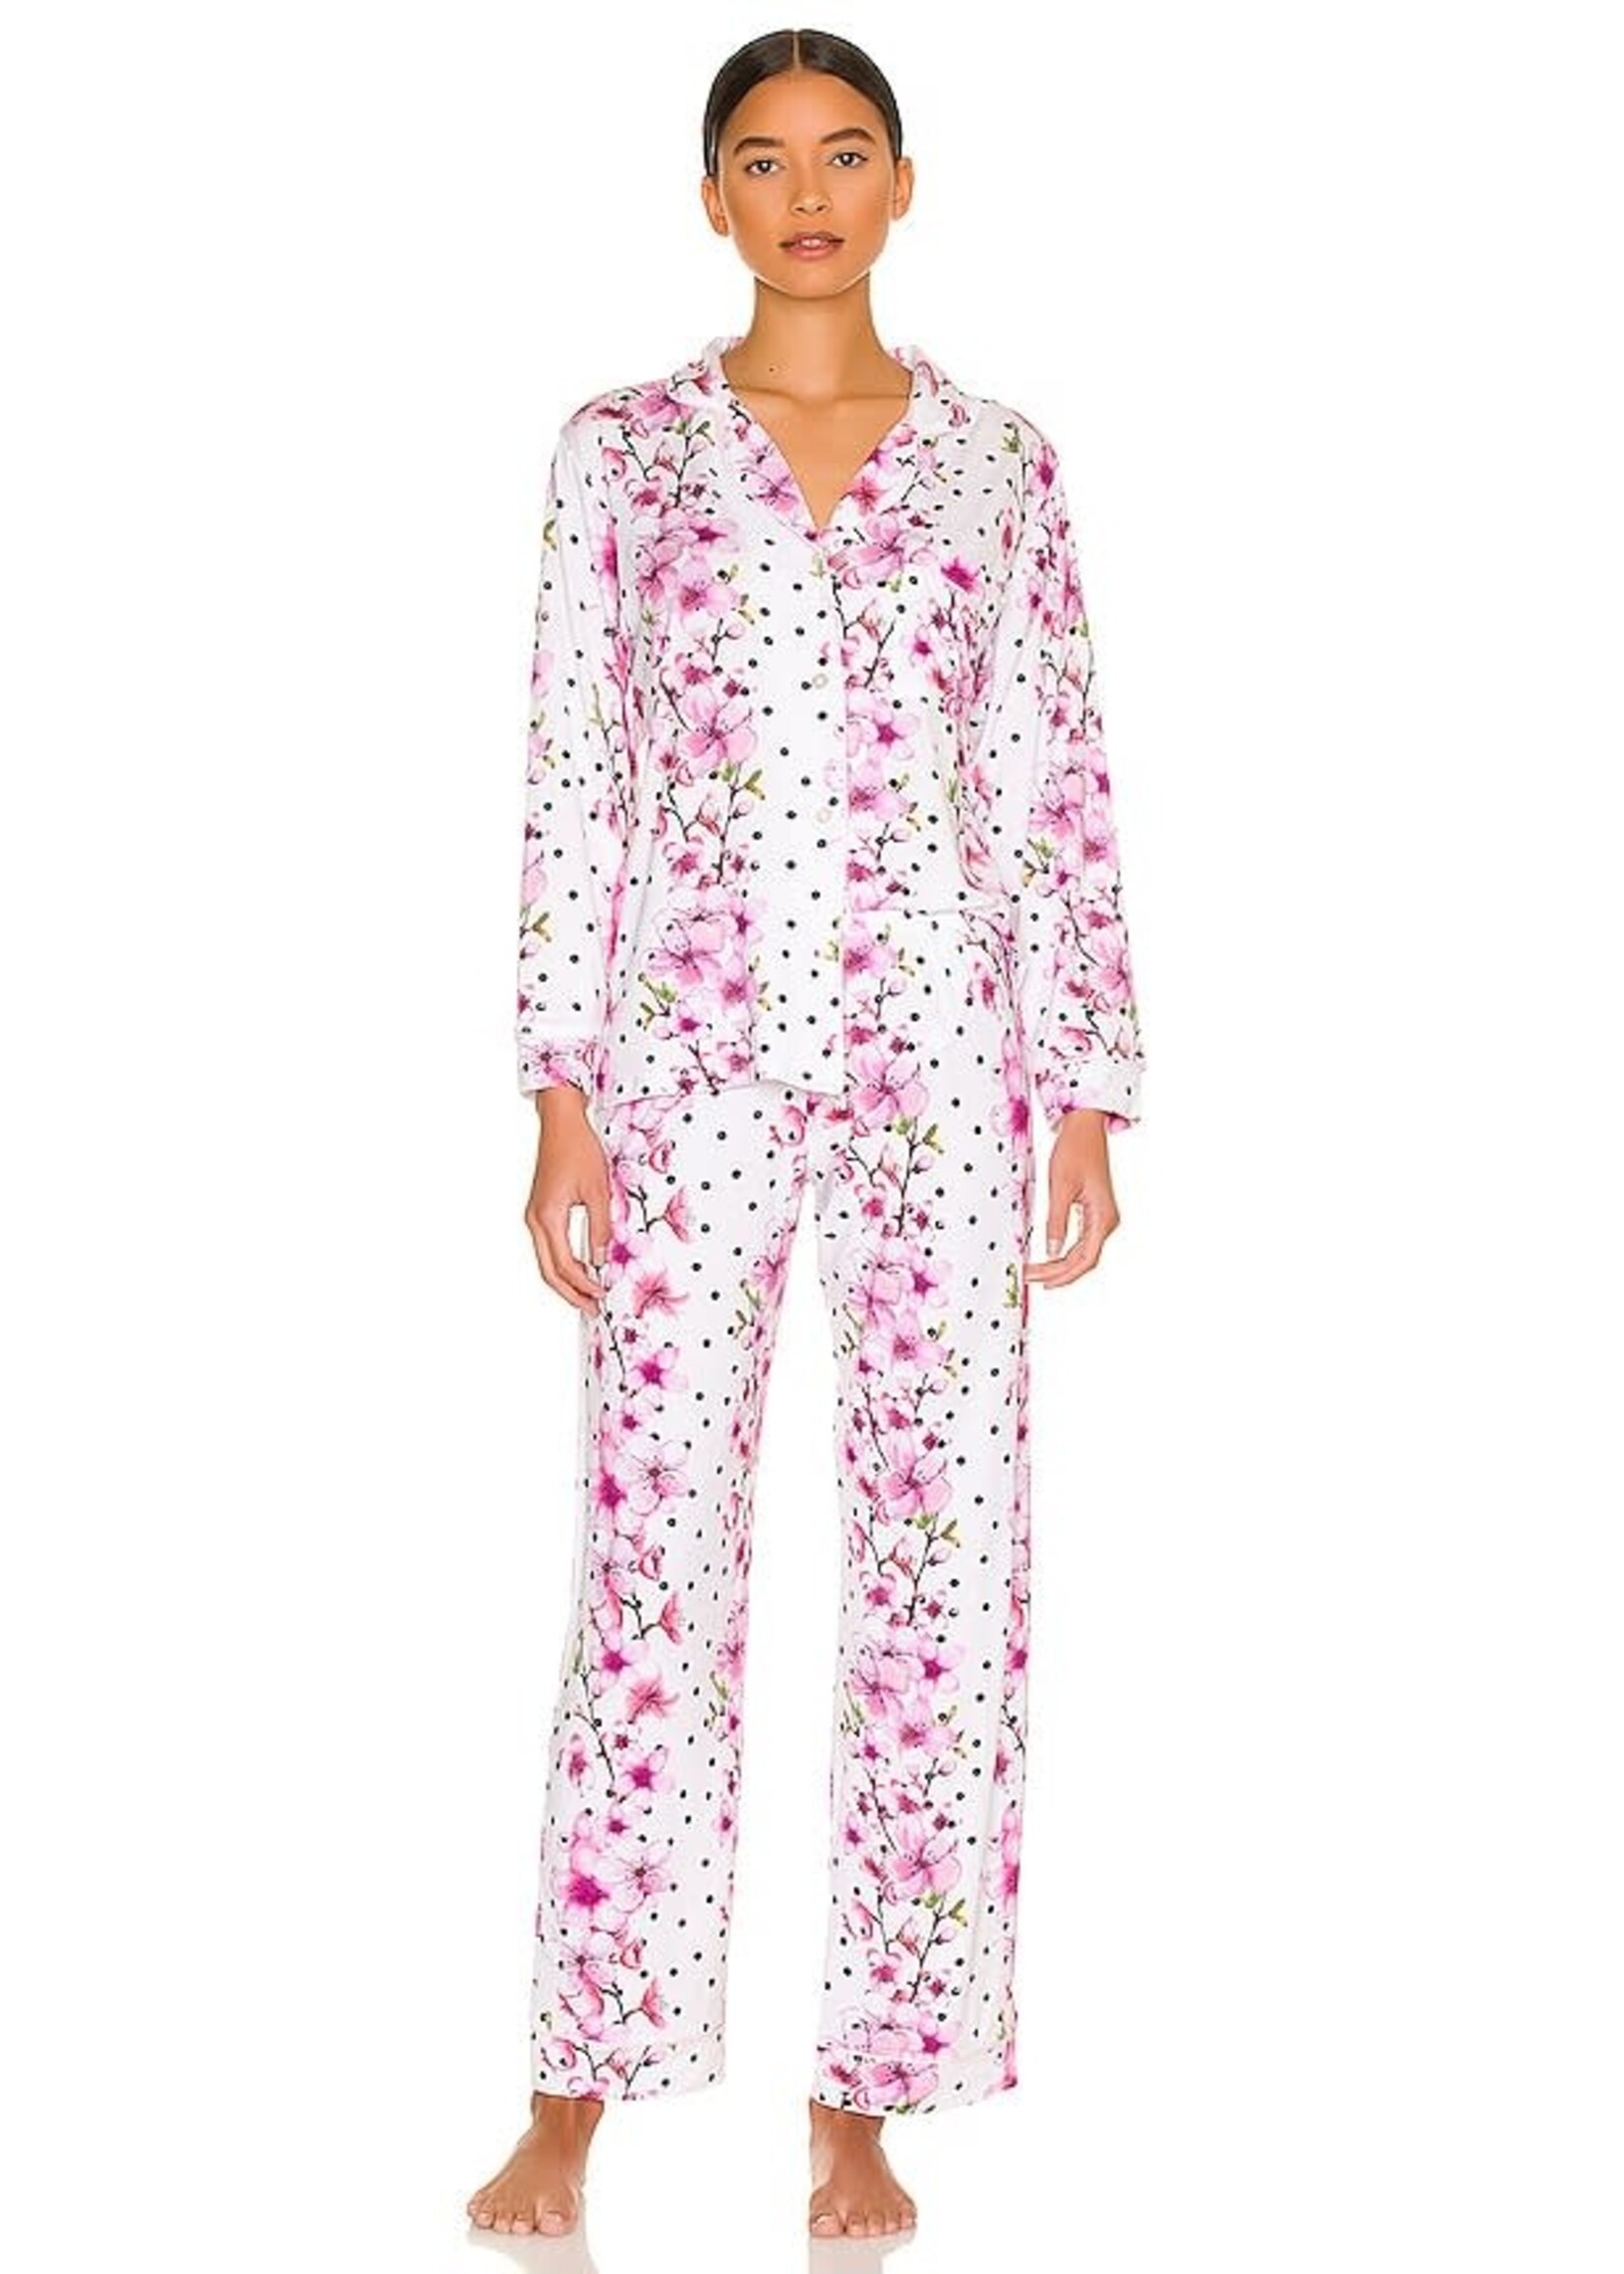 Stripe & Stare Blossom Dots TENCEL L/S Pajama Set